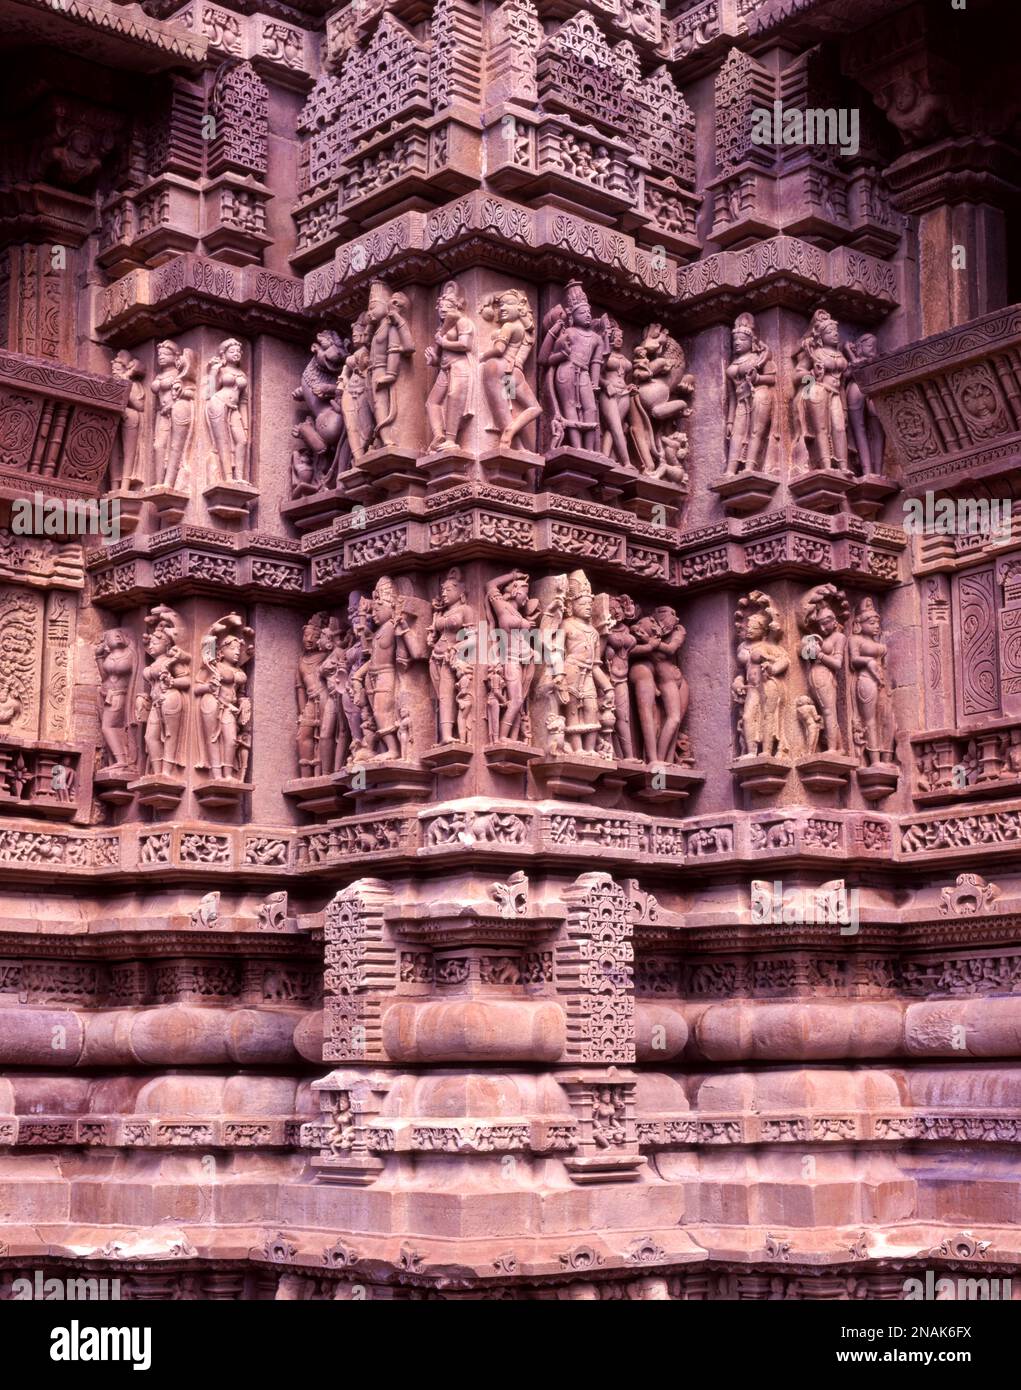 Sculptures on the exterior of the temple walls in Khajuraho, Madhya Pradesh, India Stock Photo